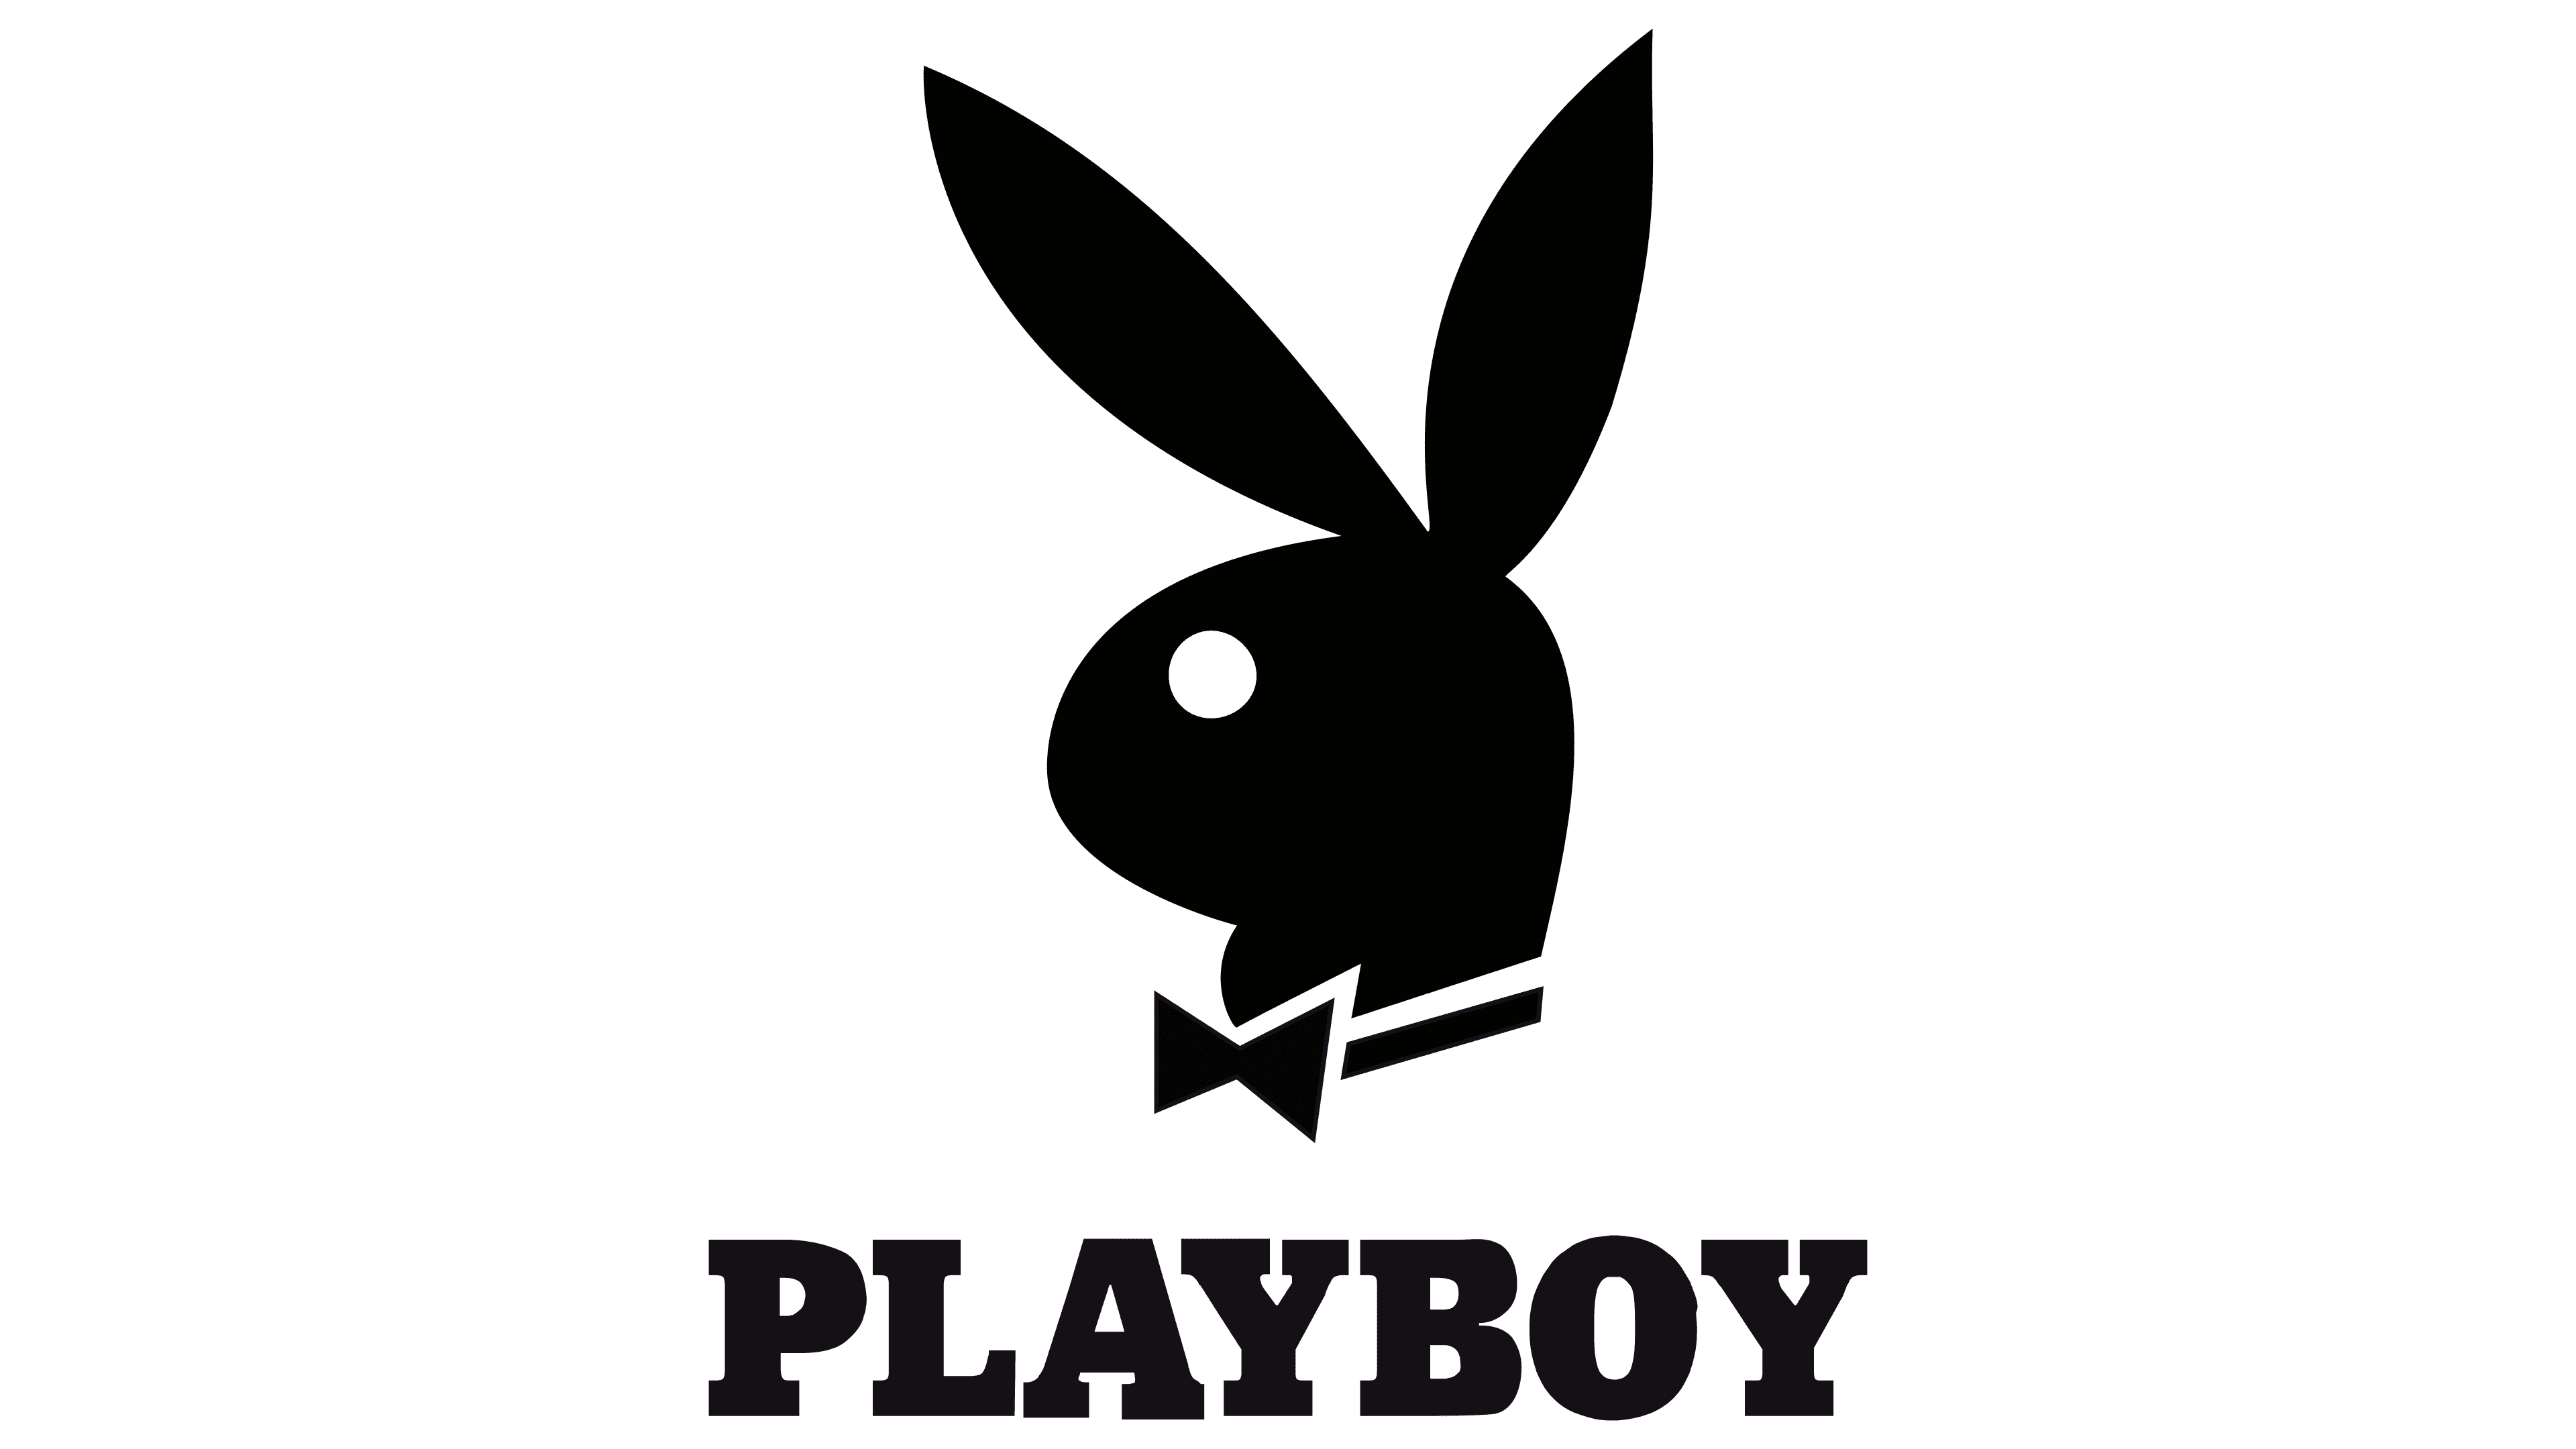 playboy bunny logo copy and paste - Cristie Blackburn